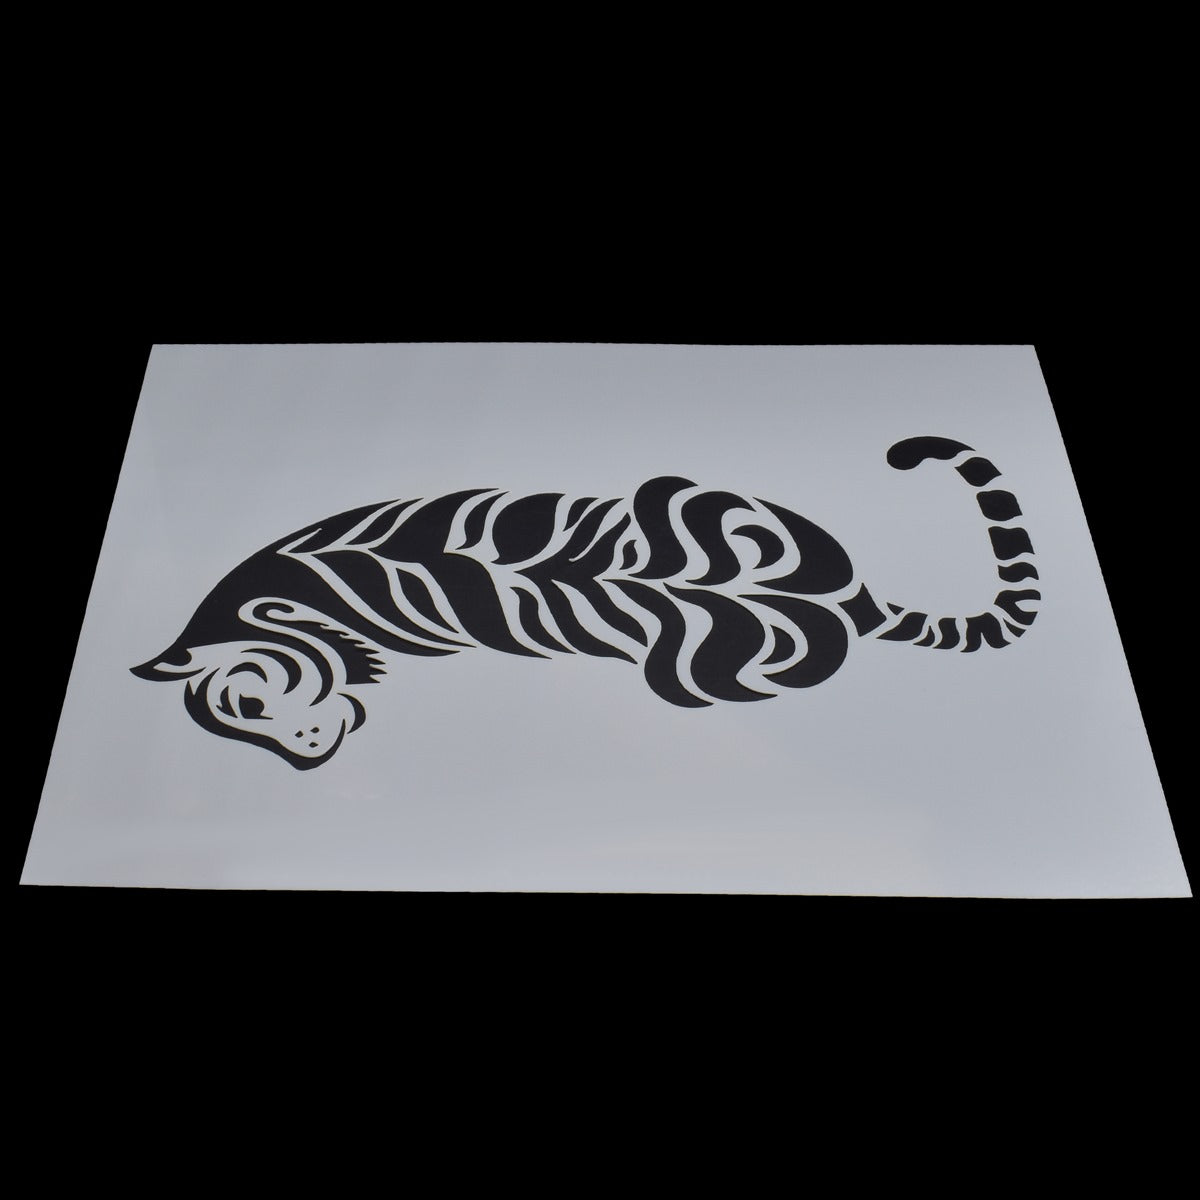 jags-mumbai Stencil Majestic Tiger Roar: Stencil Plastic A5 Size Tiger Design for Striking Artistic Statements